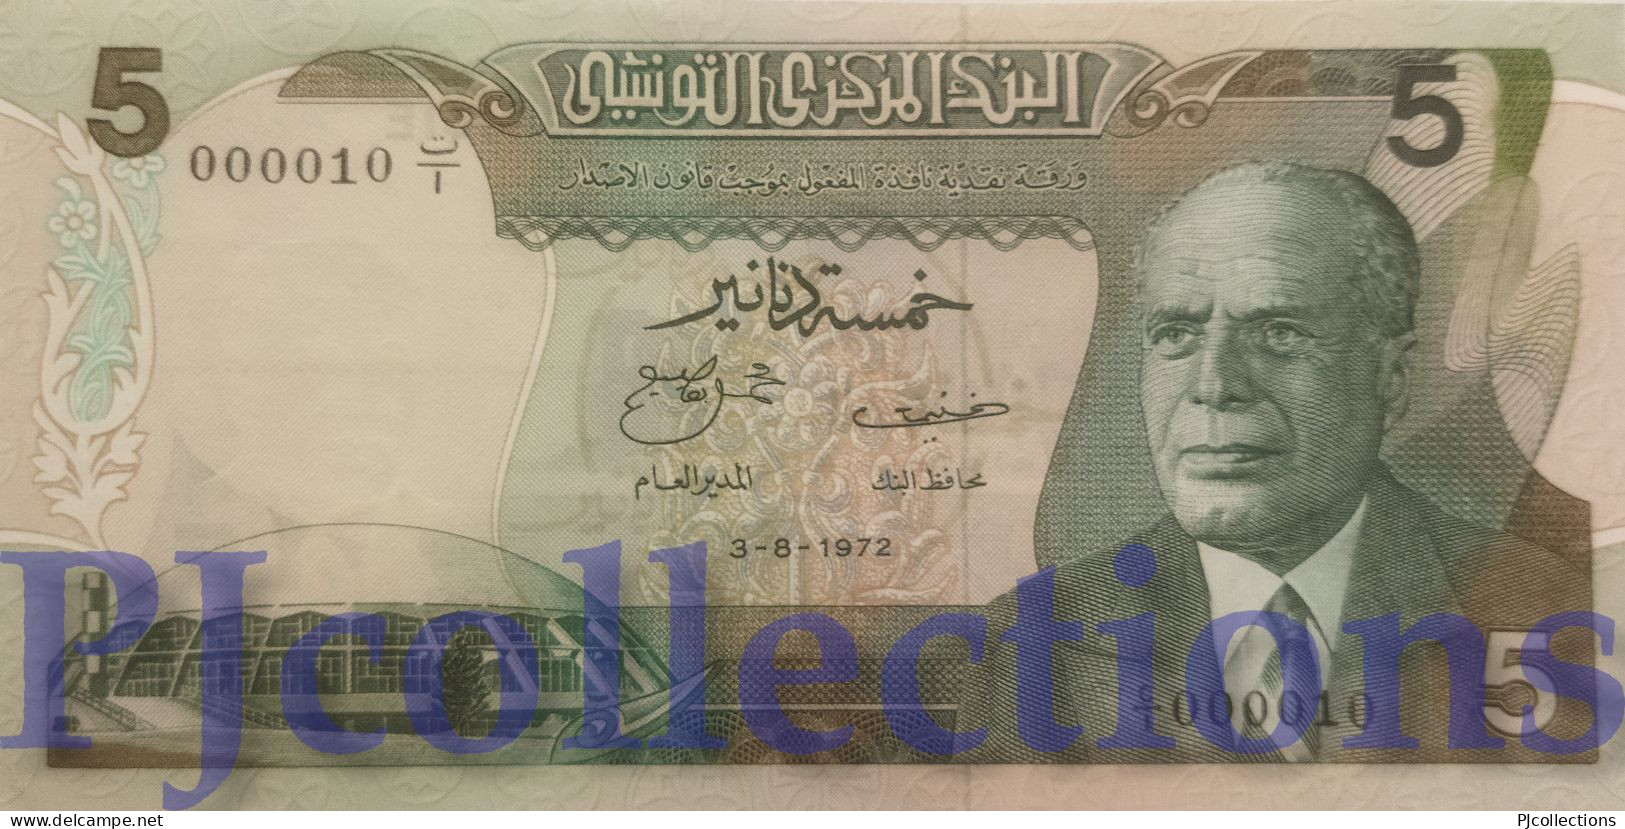 TUNISIA 5 DINARS 1972 PICK 68a AUNC VERY LOW & GOOD SERIAL NUMBER "C/1 000010" - Tunesien